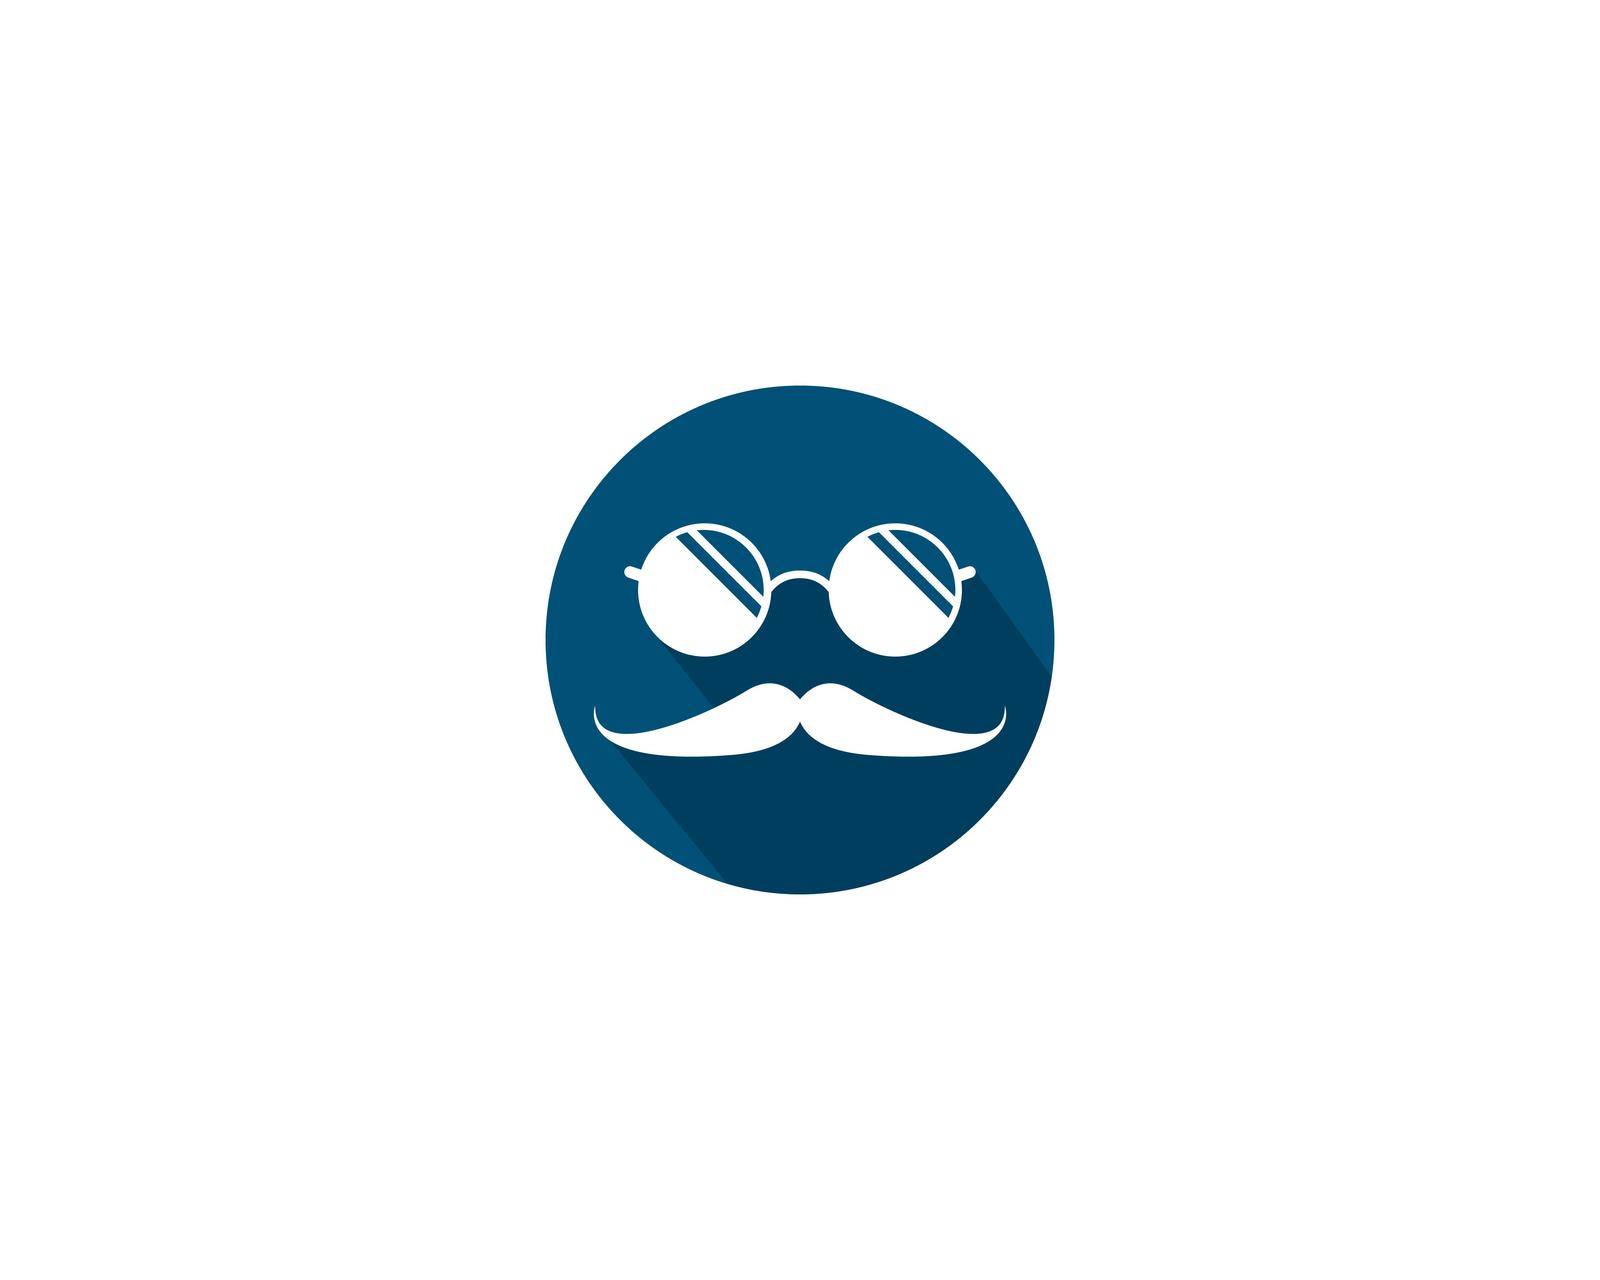 Mustache logo icon illustration